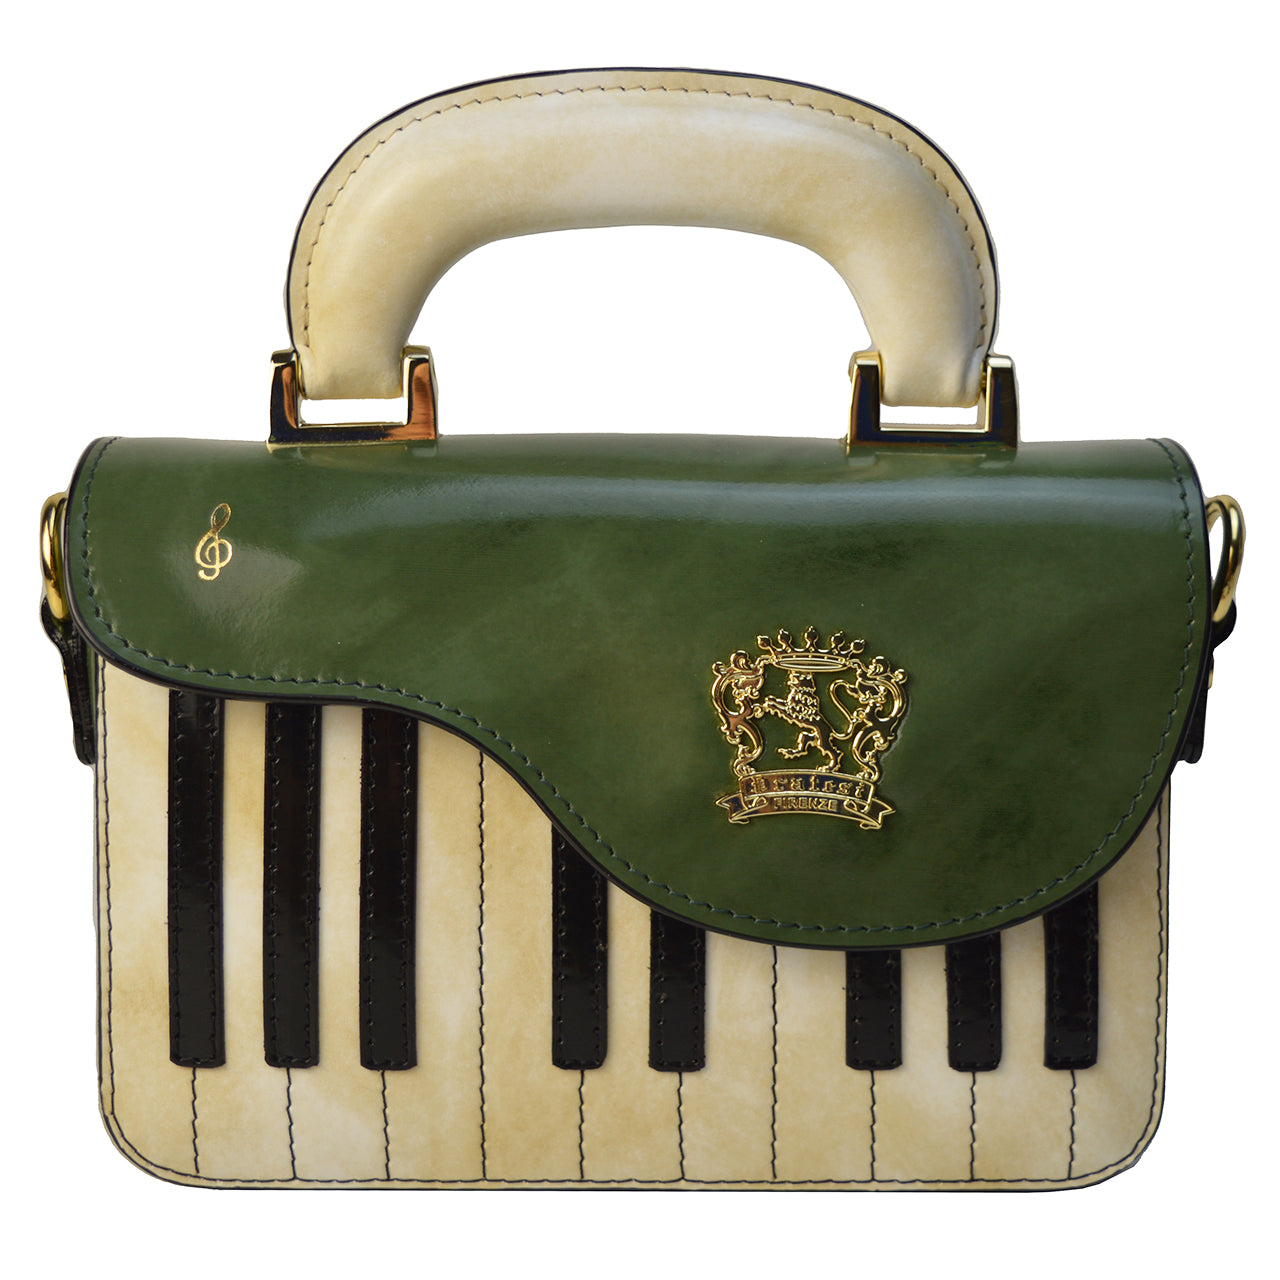 Pratesi Pianola R534 Cross Body Bag in genuine Italian leather - Brunelleschi Leather Dark Green